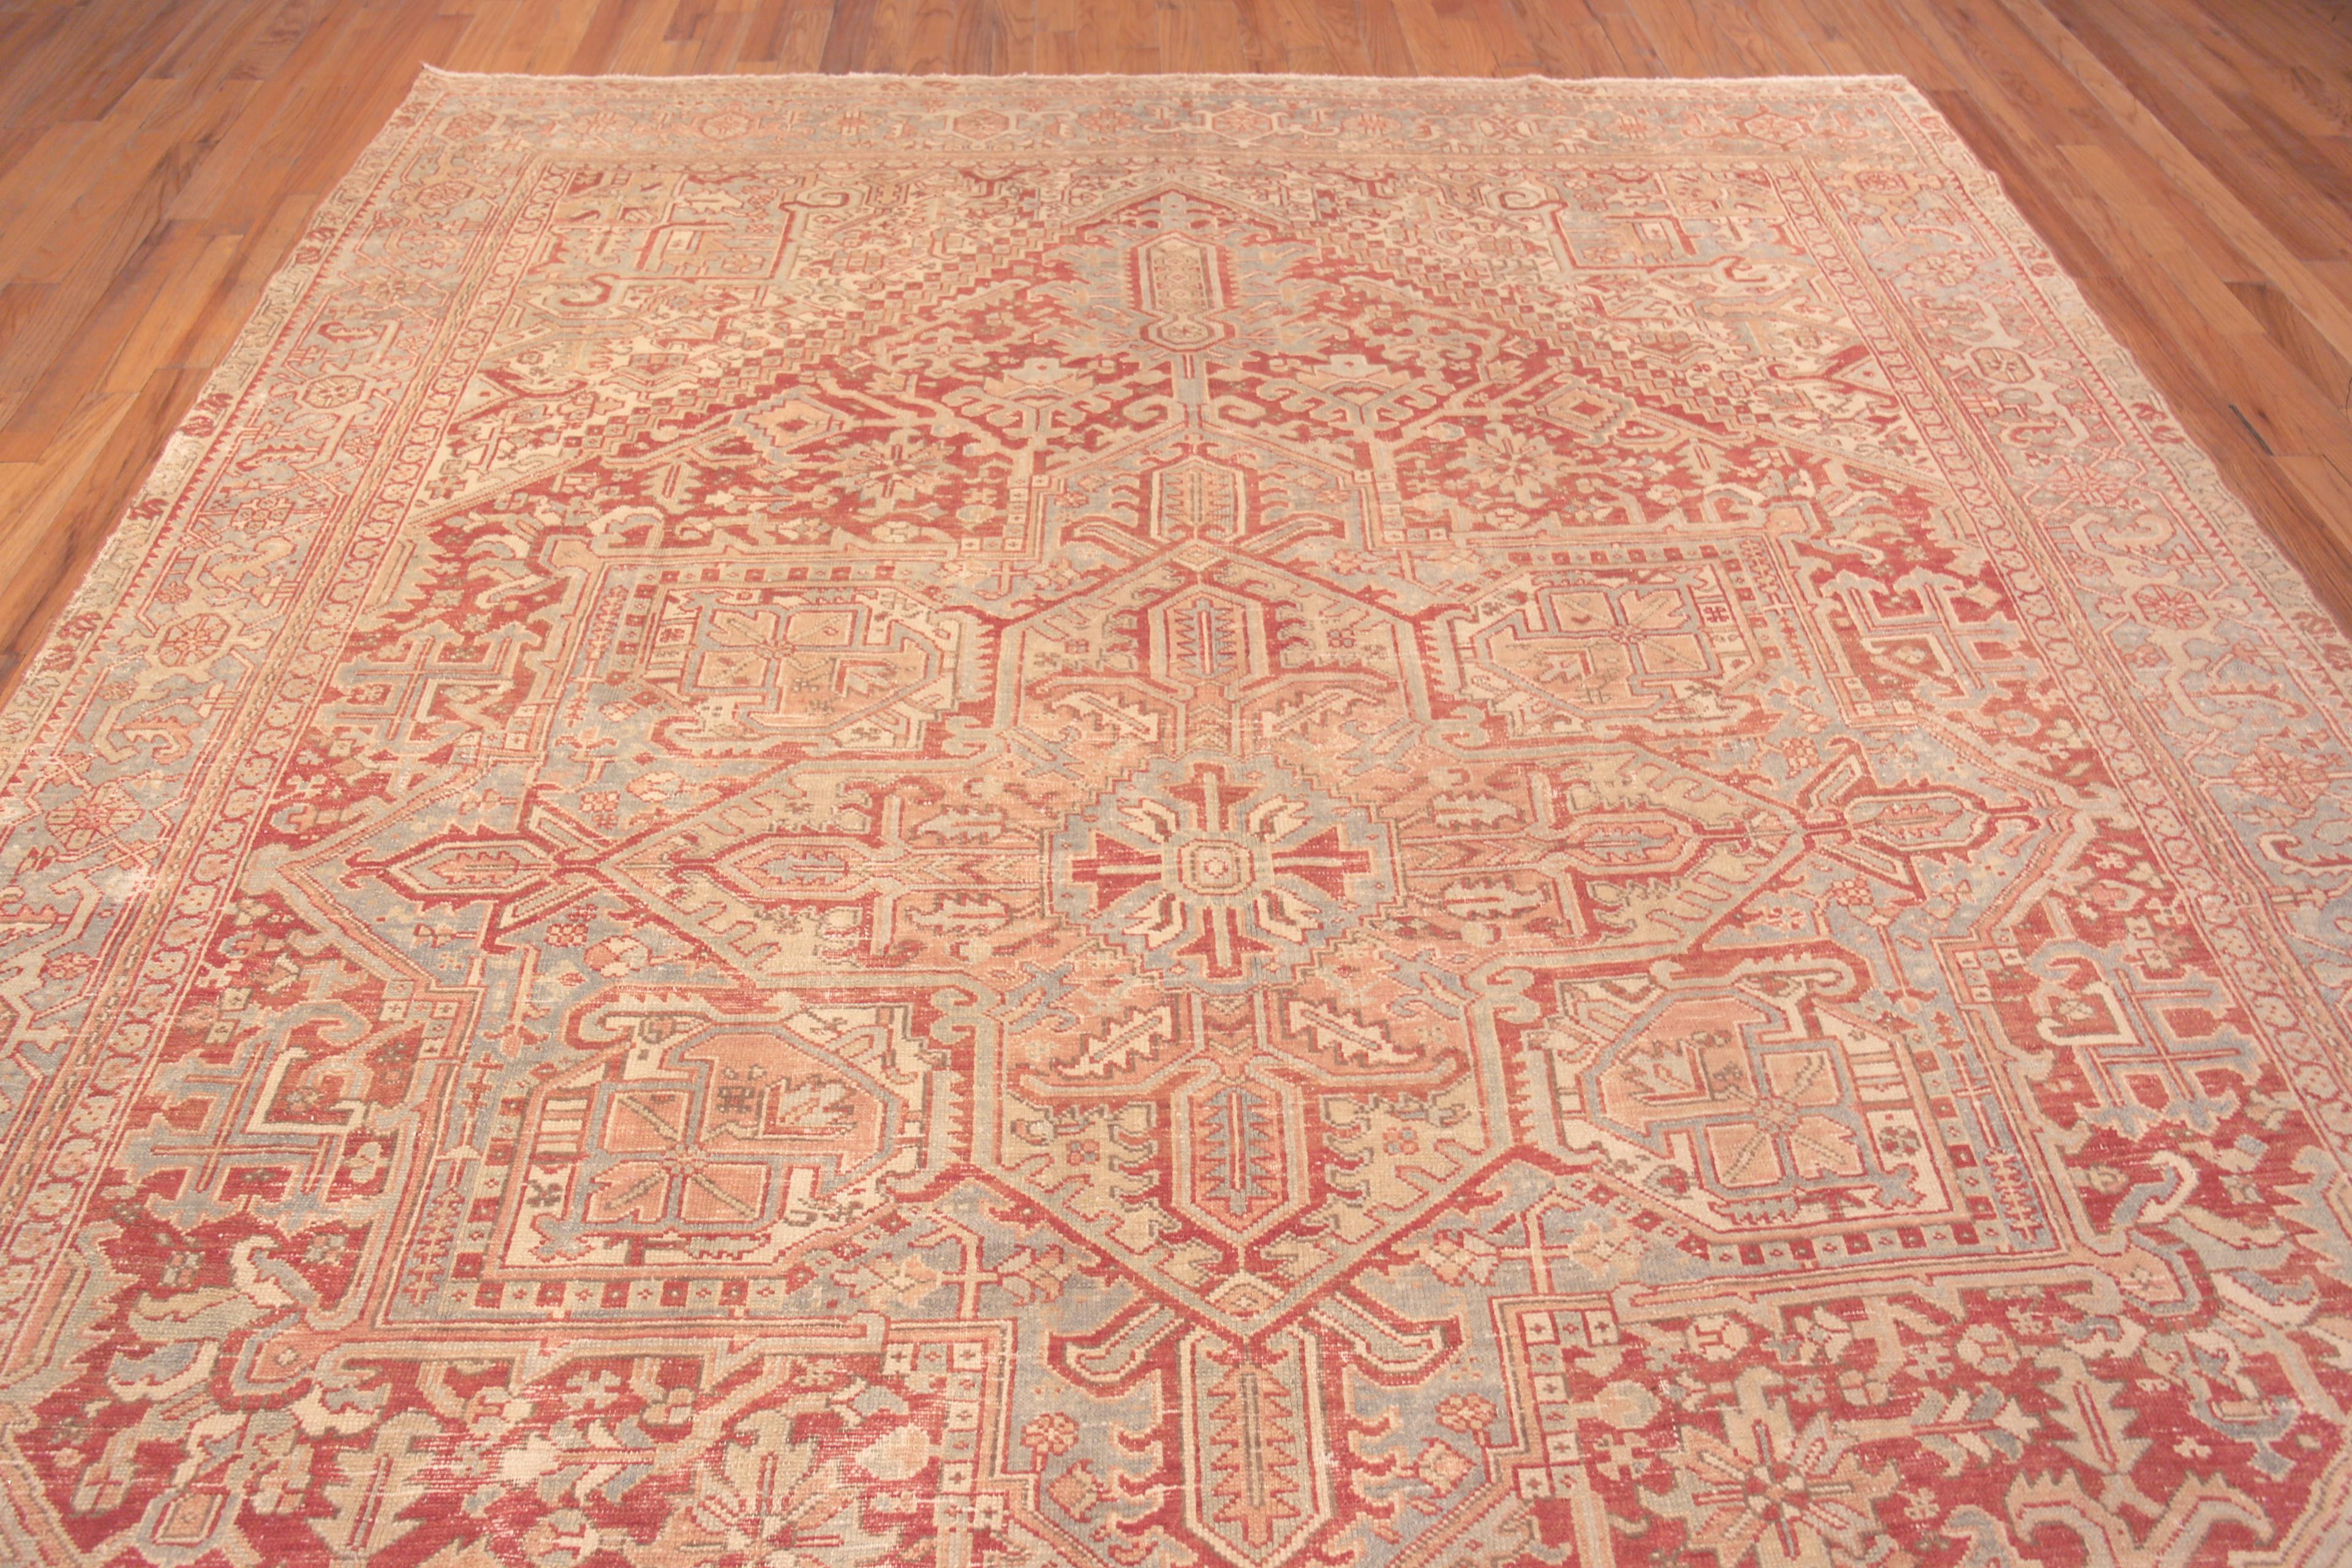 Decorative Antique Persian Heriz Rug 10' x 13'2